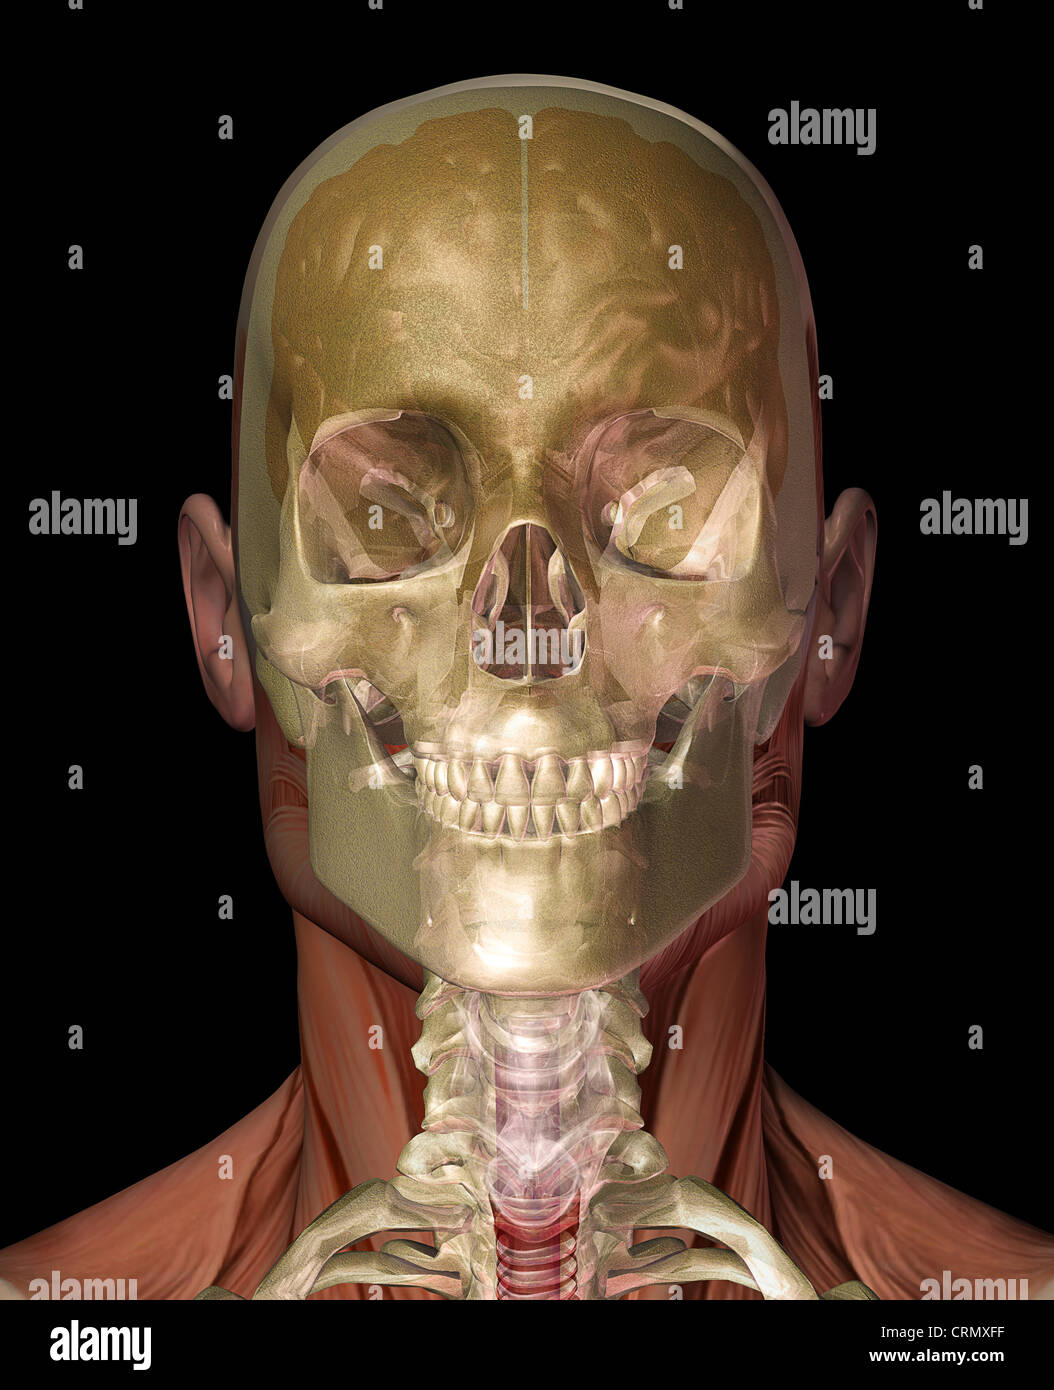 Human head anatomy showing the brain and skull Stock Photo